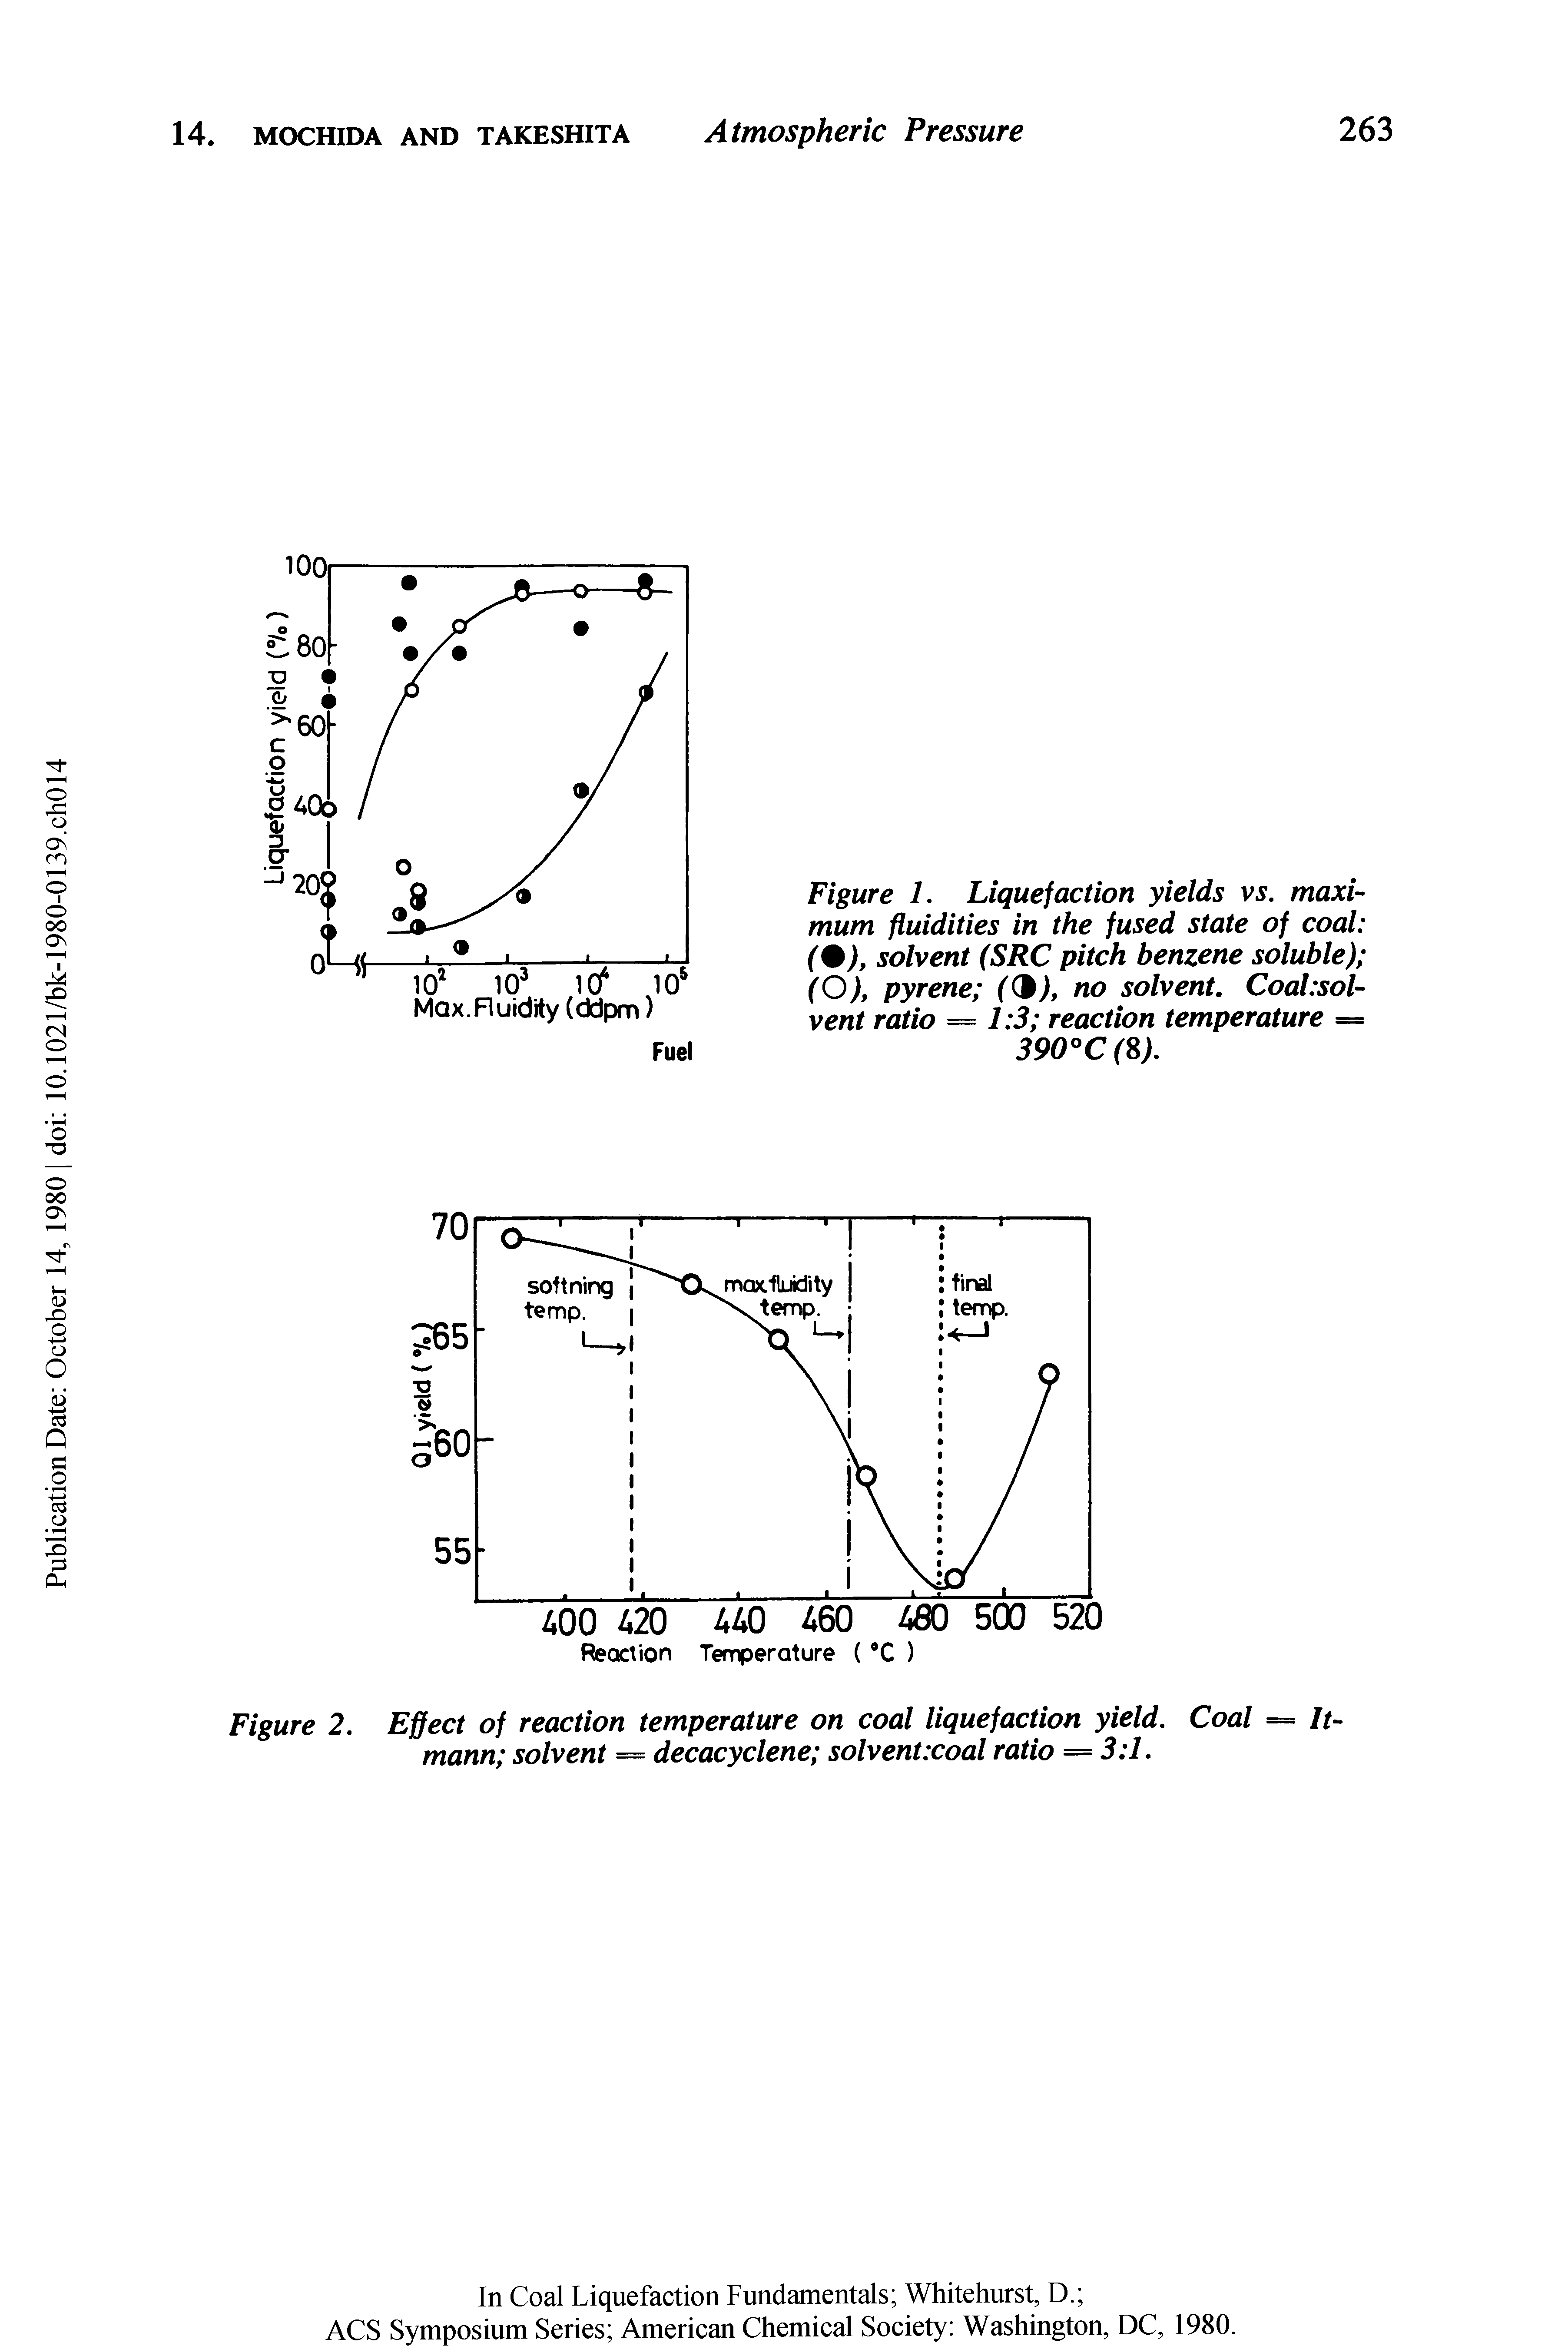 Figure 2. Effect of reaction temperature on coal liquefaction yield. Coal = It-mann solvent = decacyclene solvent.coal ratio = 3 1.